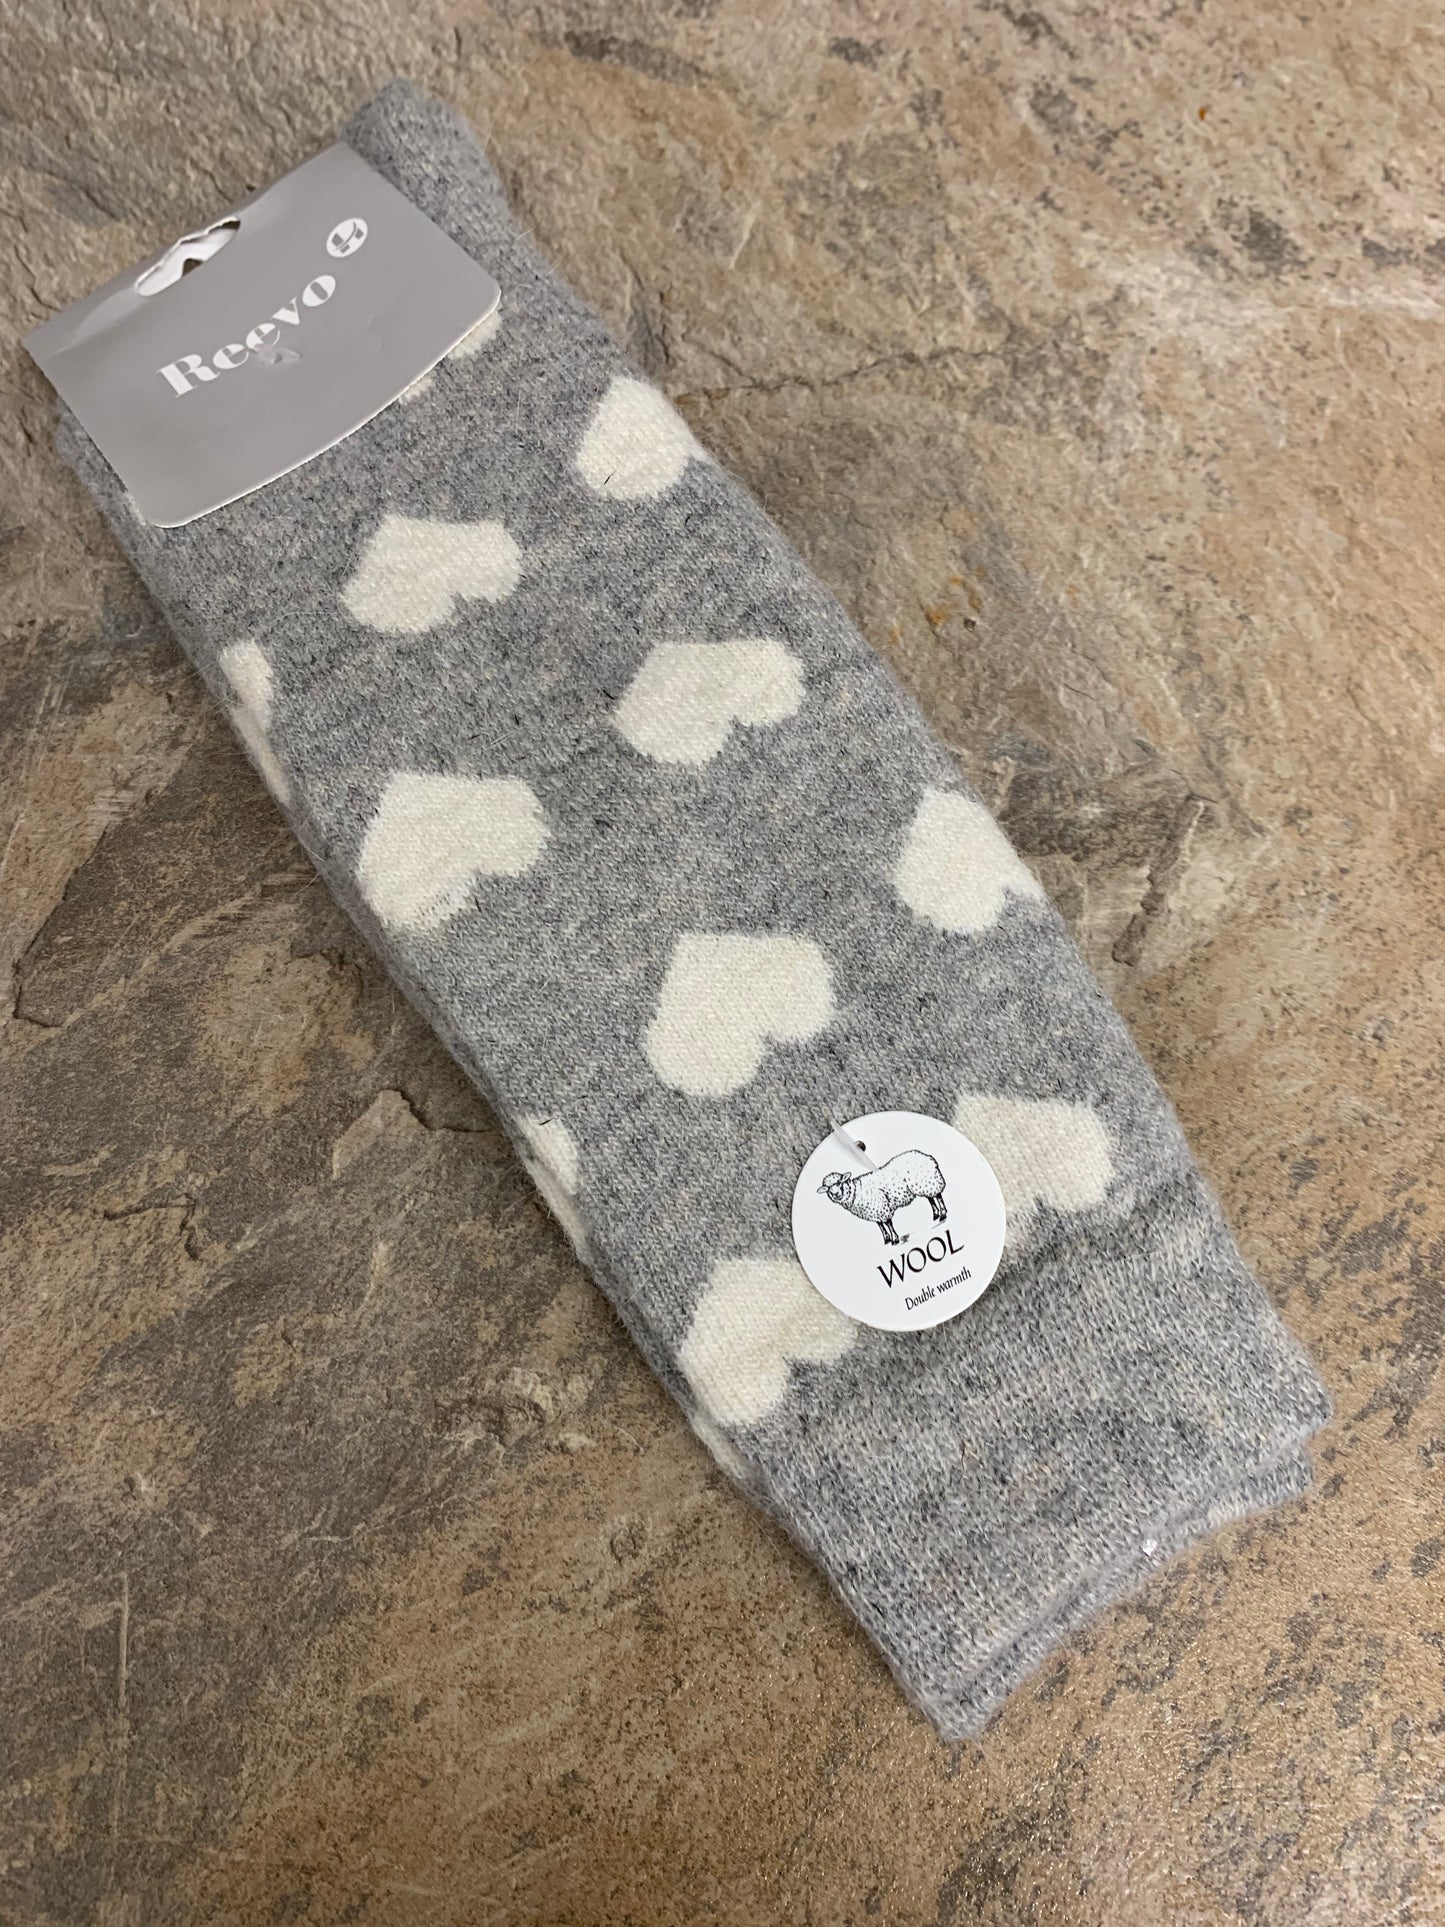 Wool mix heart socks sizes 3-7